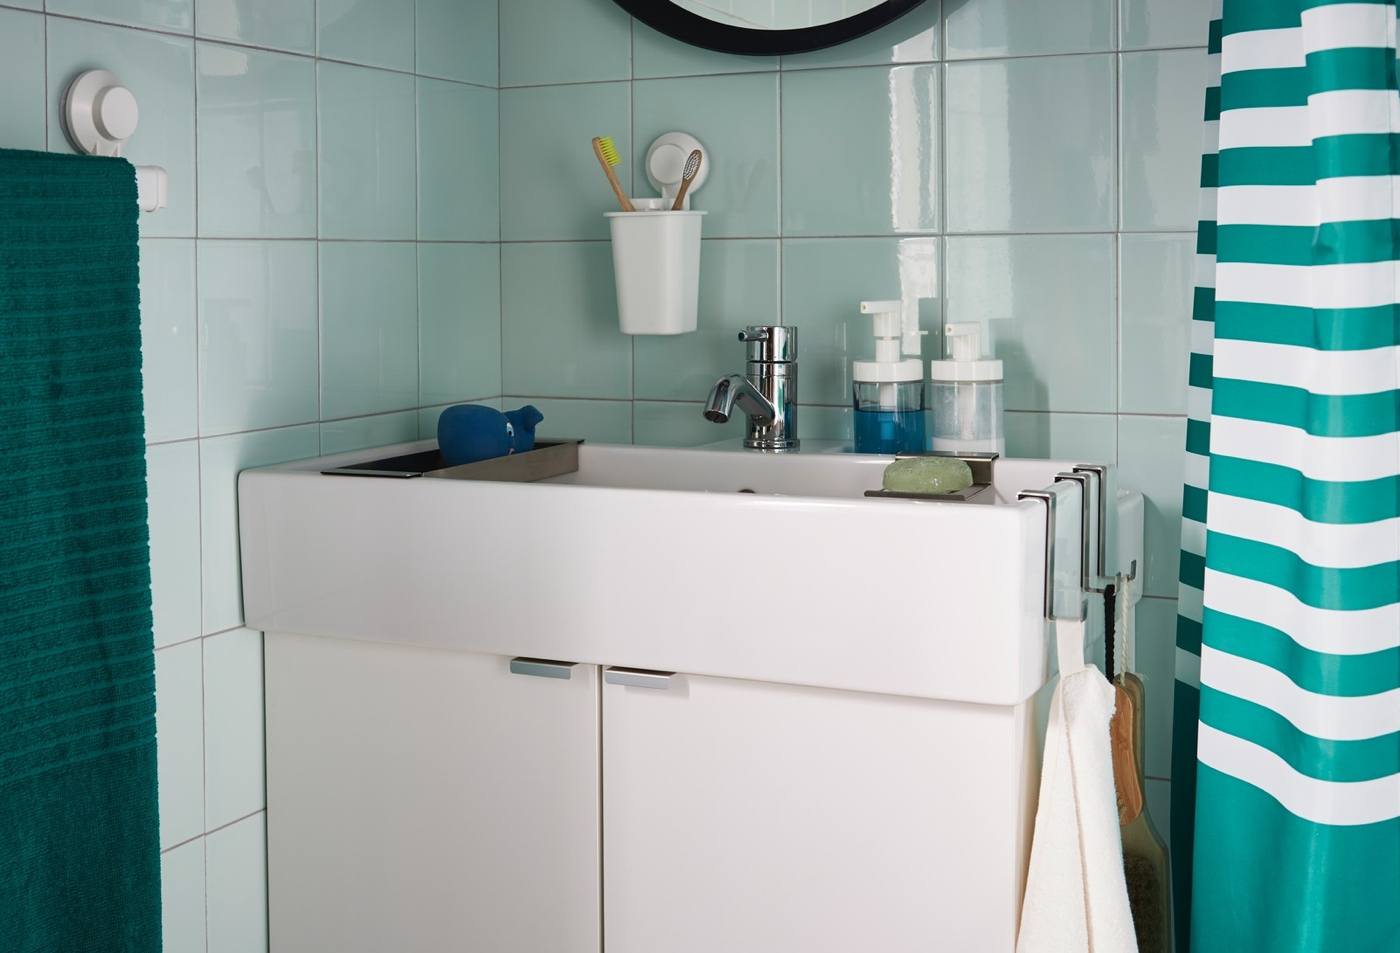 Ikea bathroom furniture practical set Washbasin countertop with colors